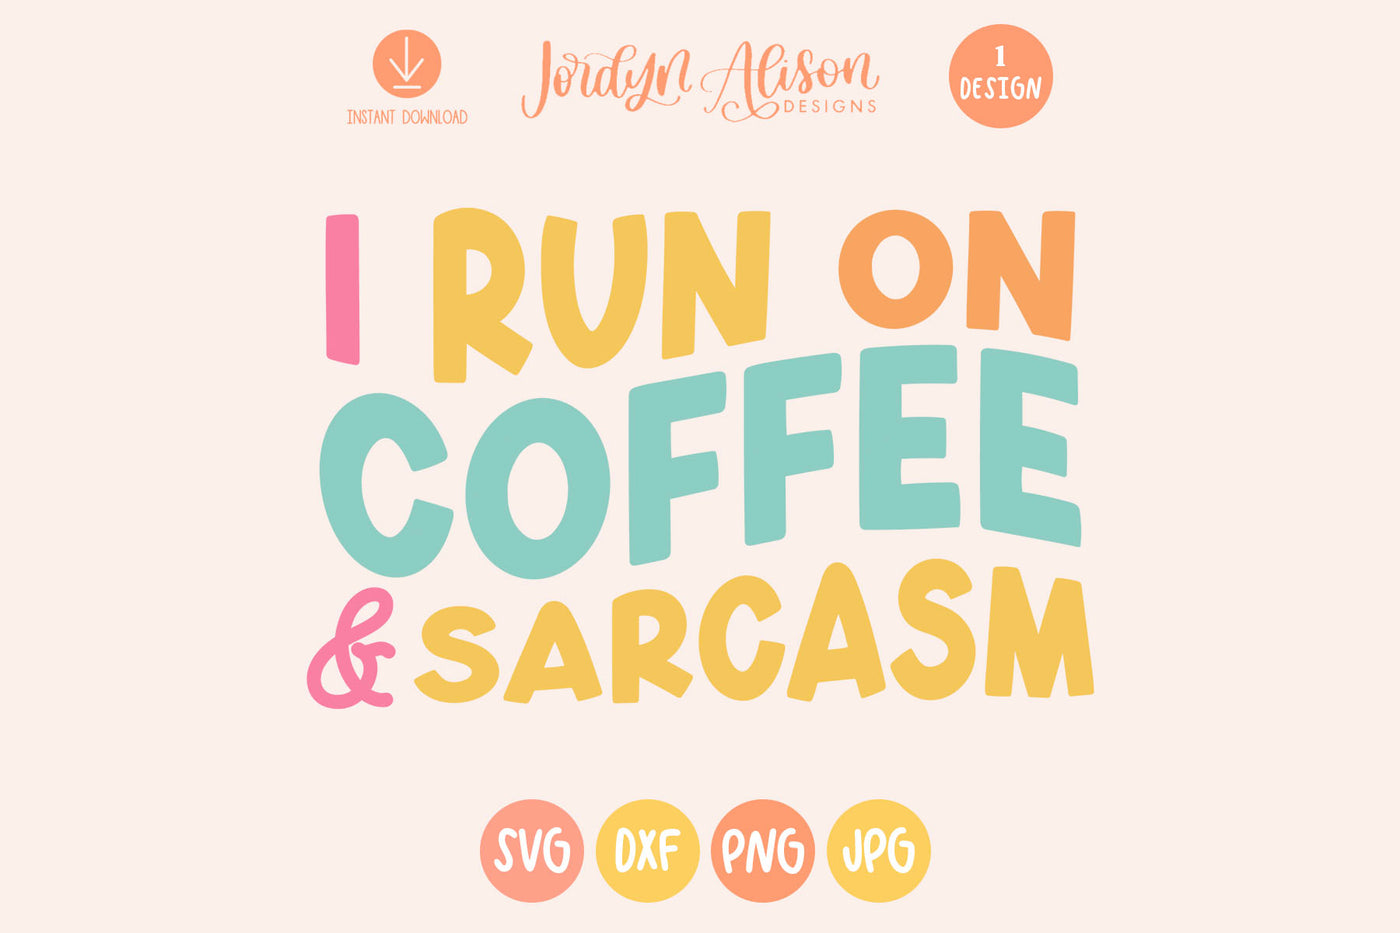 Run on Coffee and Sarcasm SVG